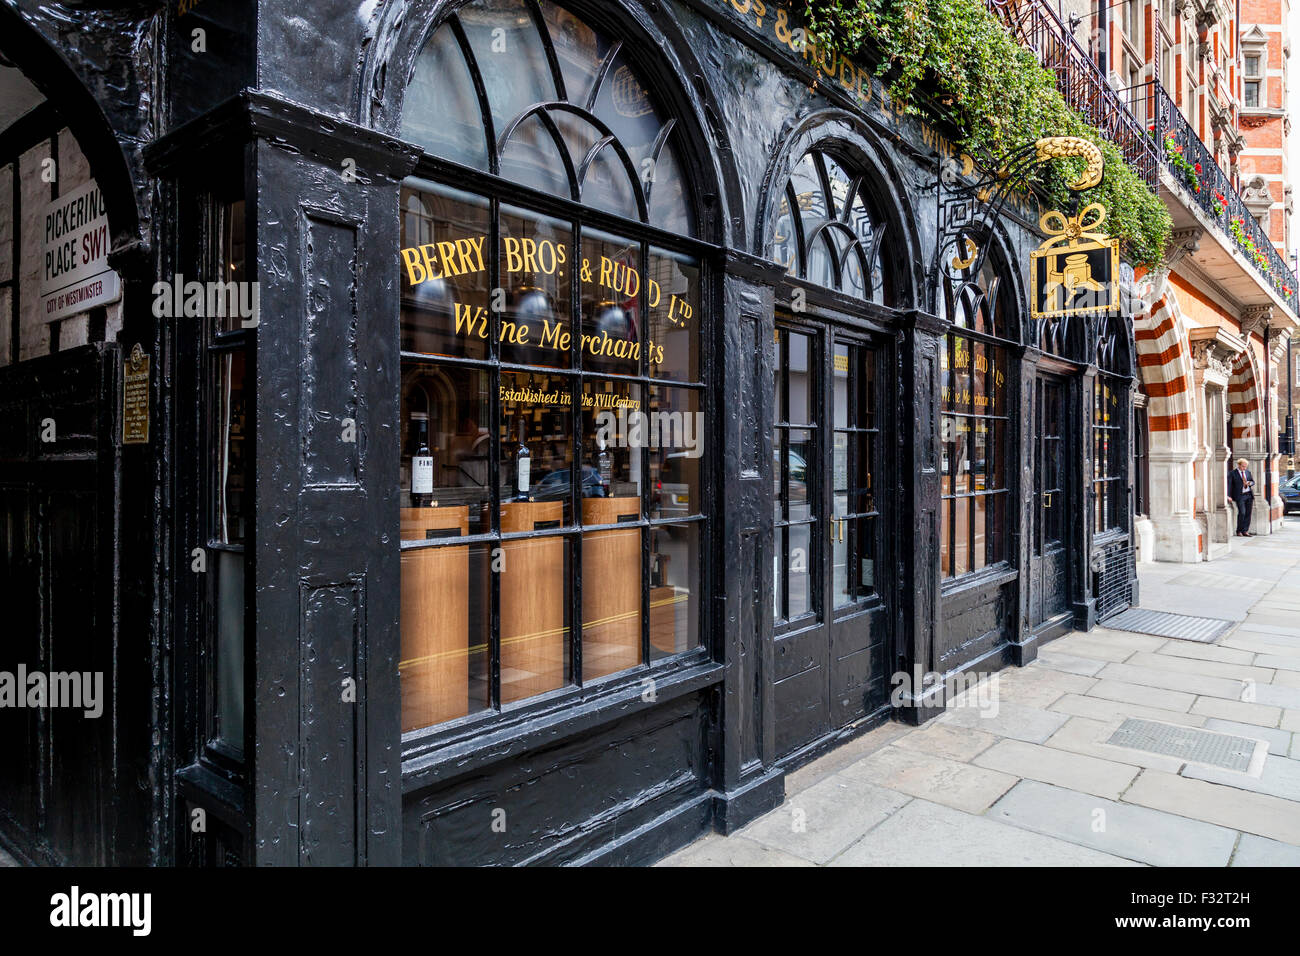 Berry Bro's and Rudd, Wine Mechants, St James's Street, London, England Stock Photo